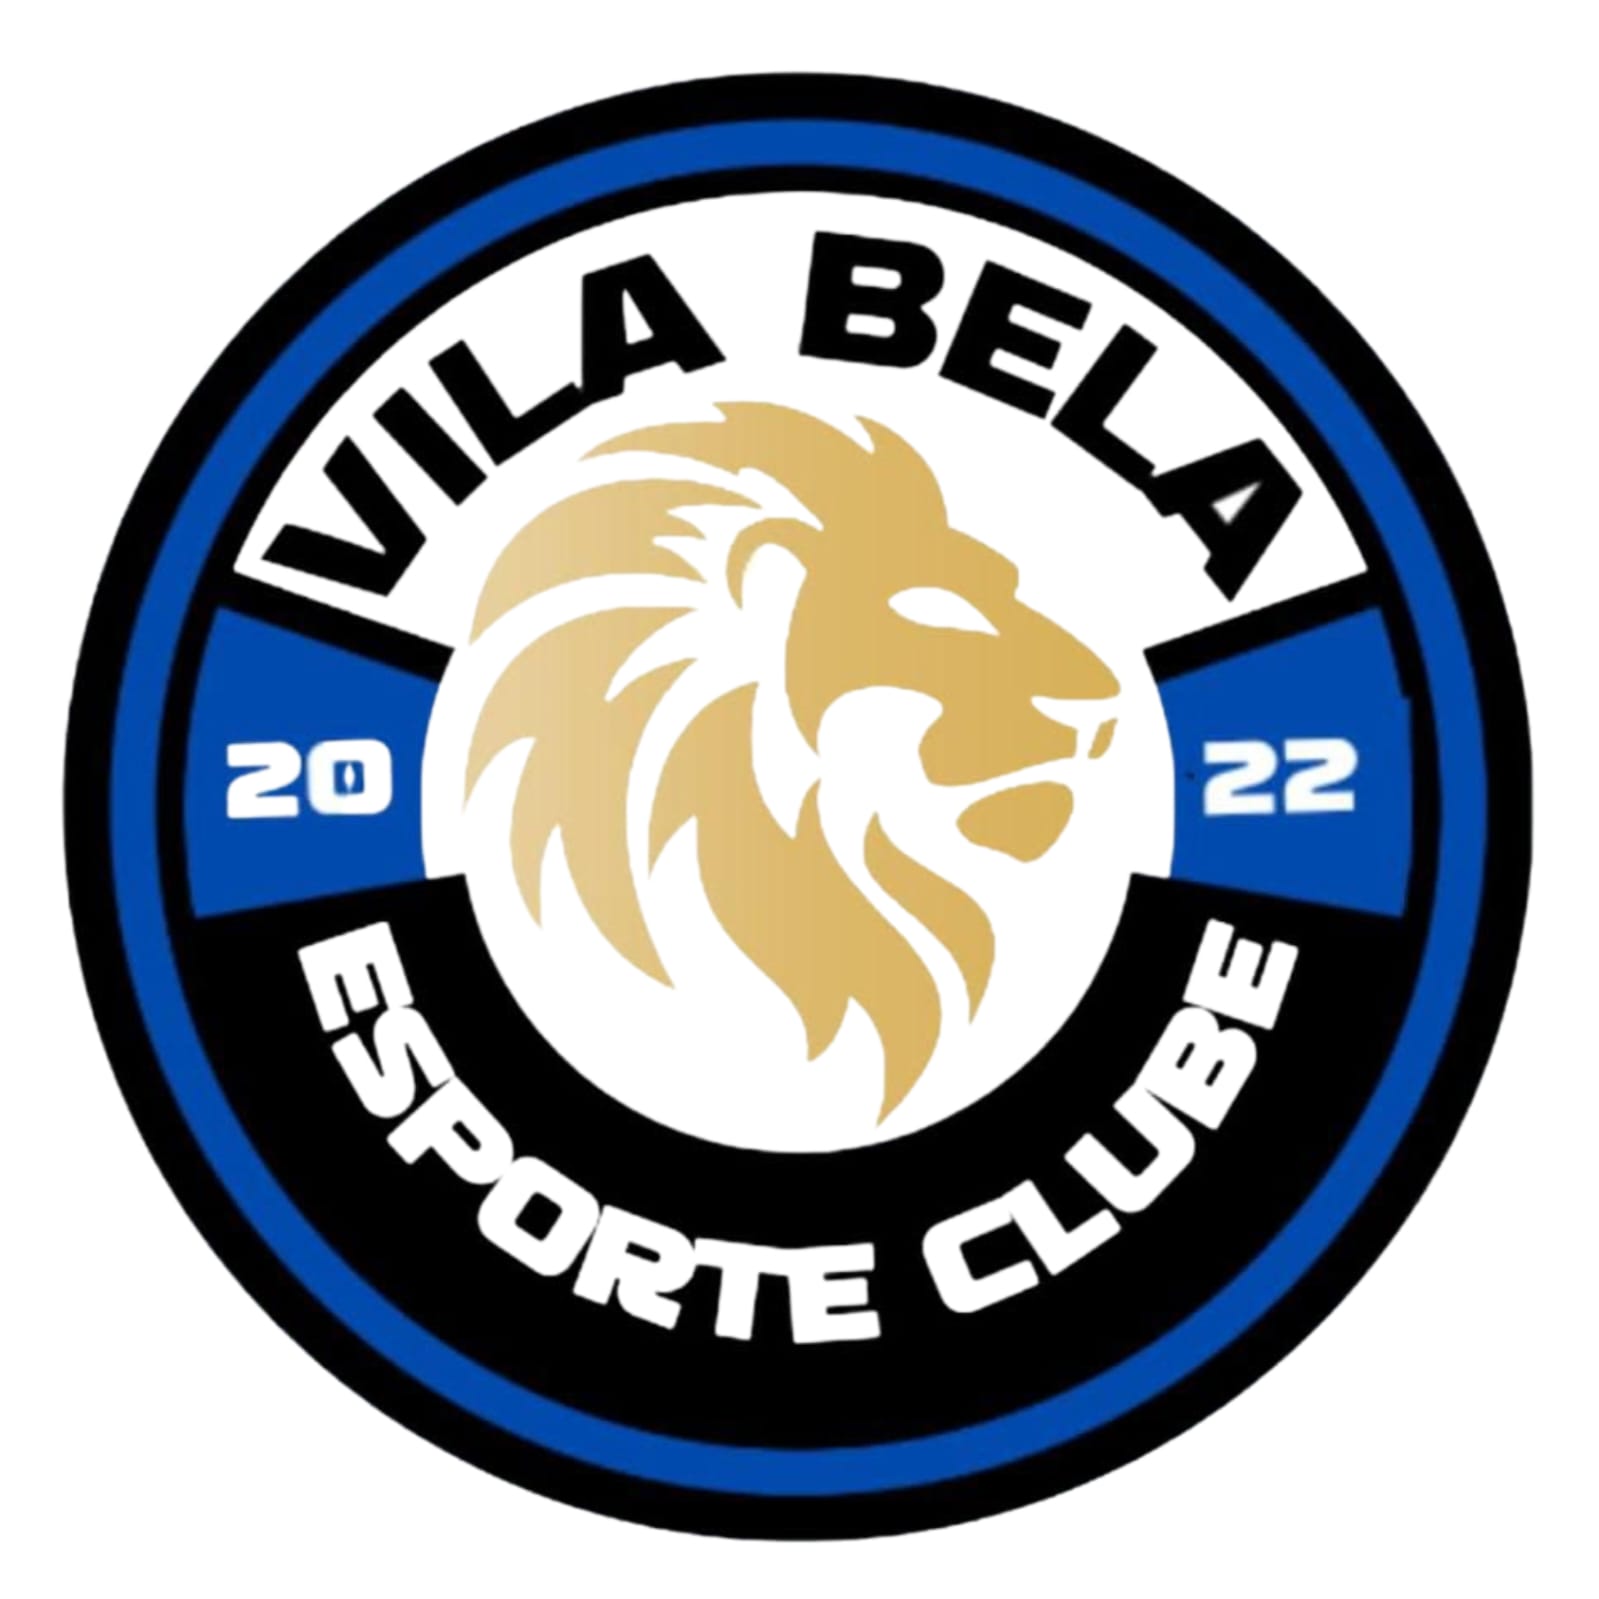 Vila Bela EC